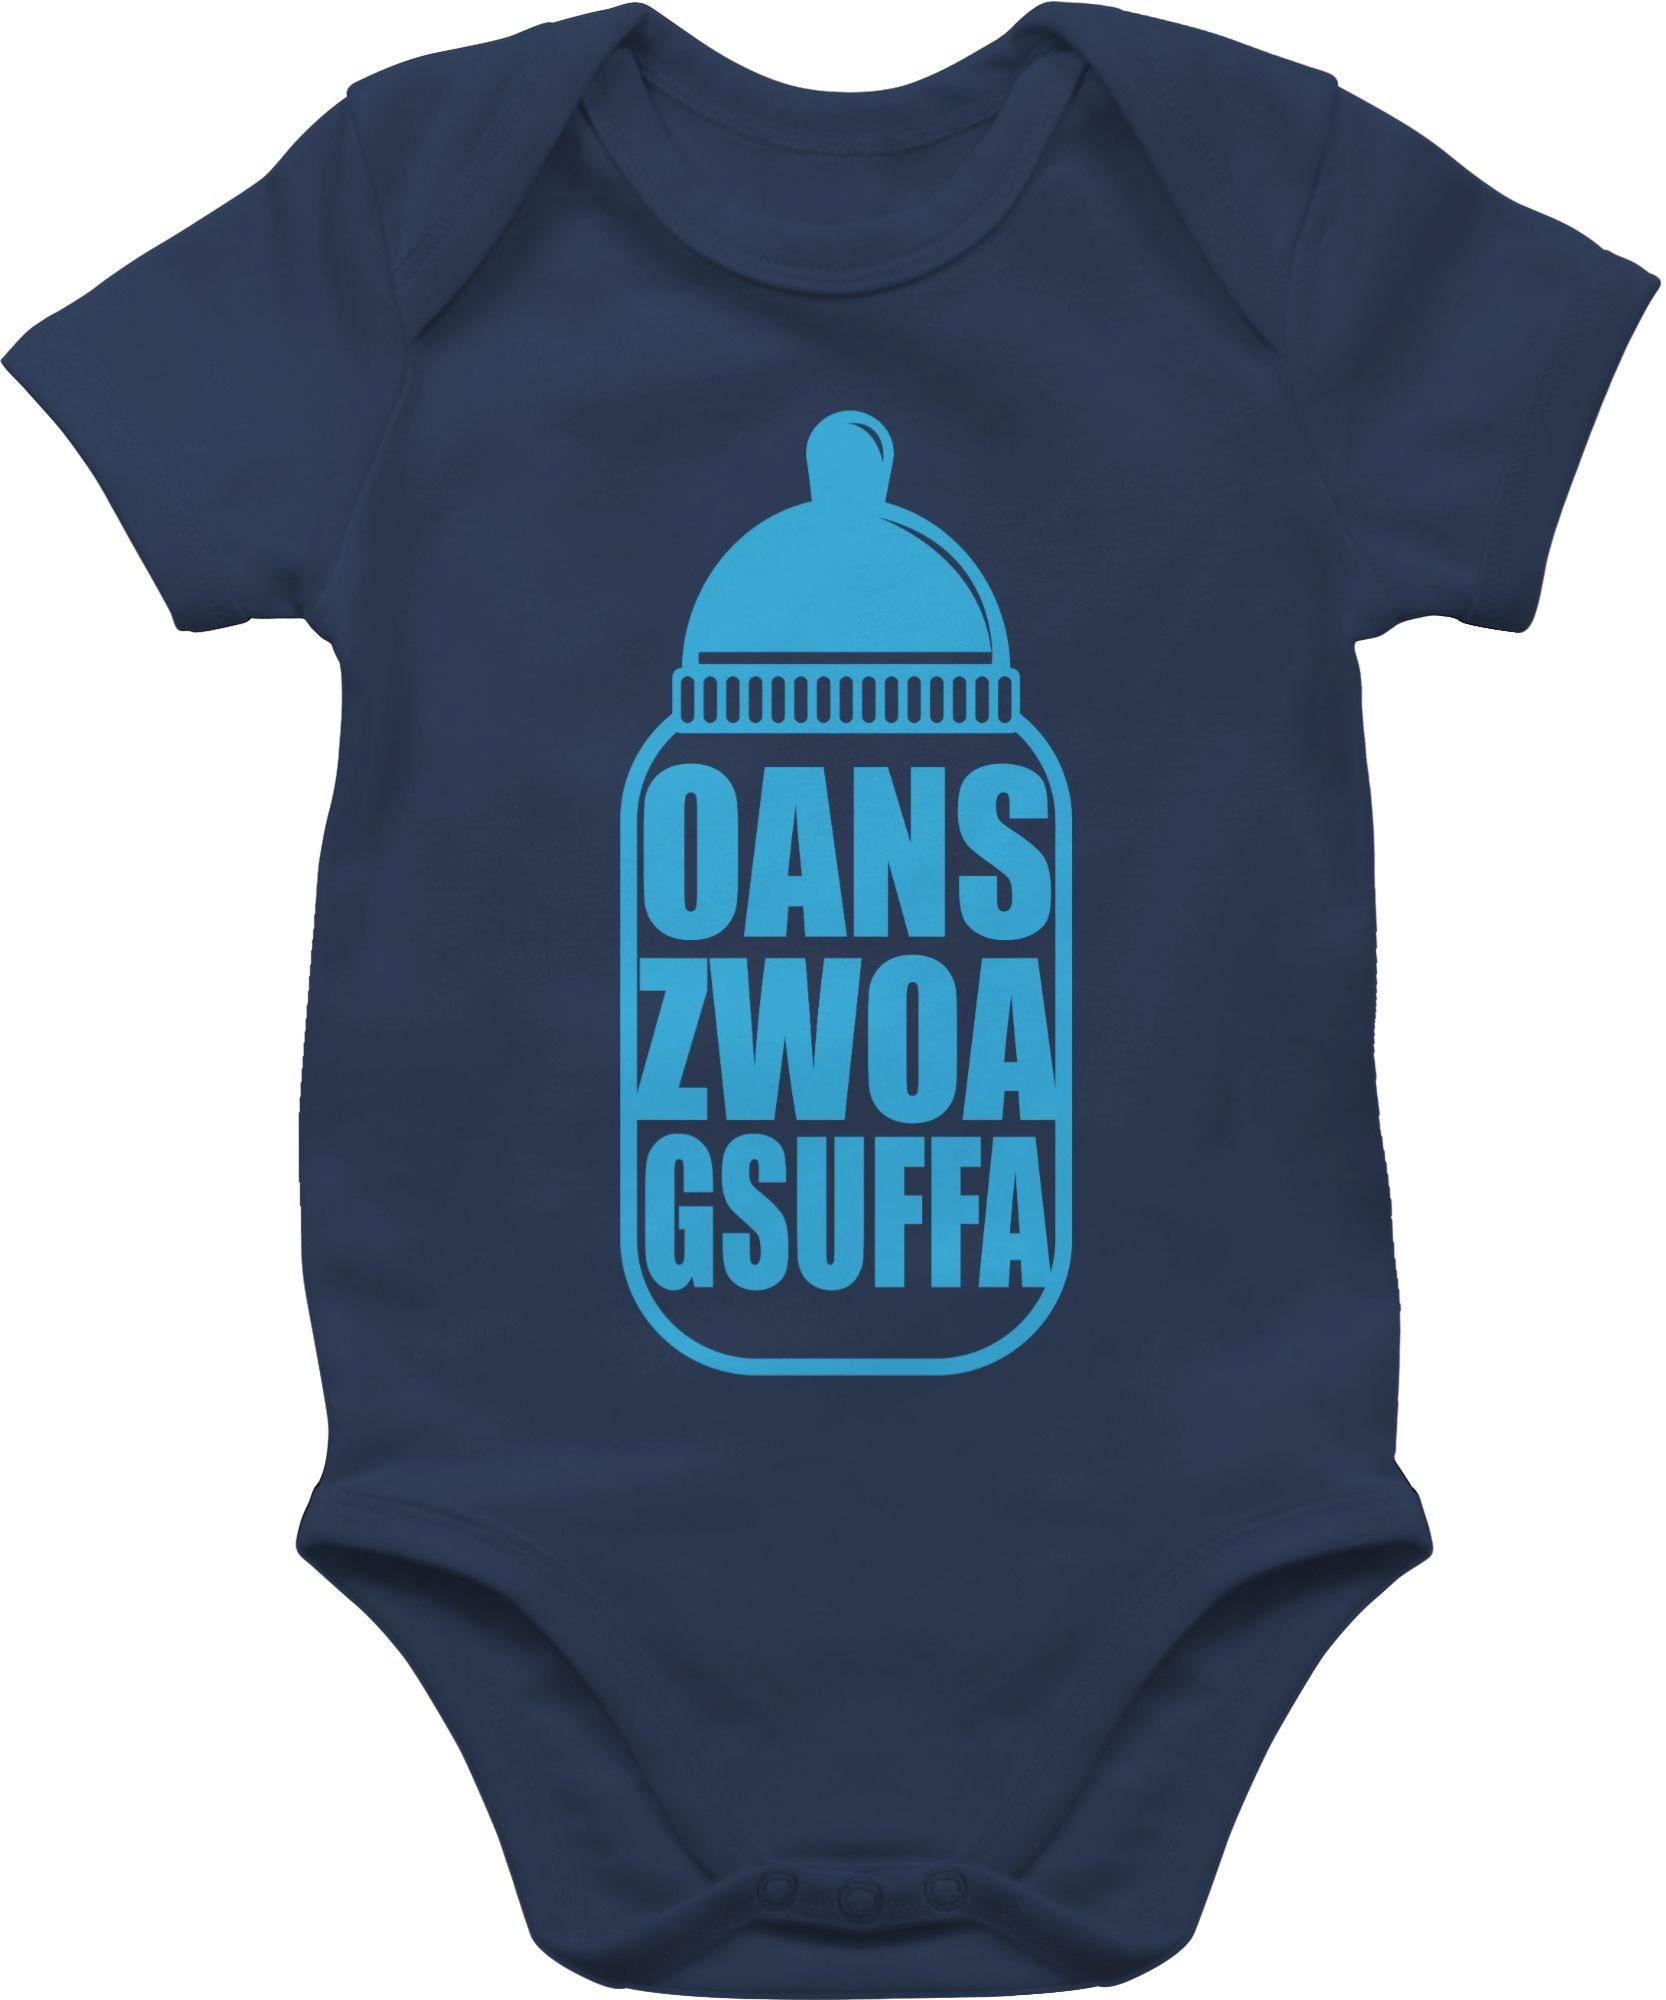 Shirtracer Shirtbody Gsuffa Baby für blau Blau Oans Babyflasche Navy Outfit Oktoberfest Mode 2 Zwoa